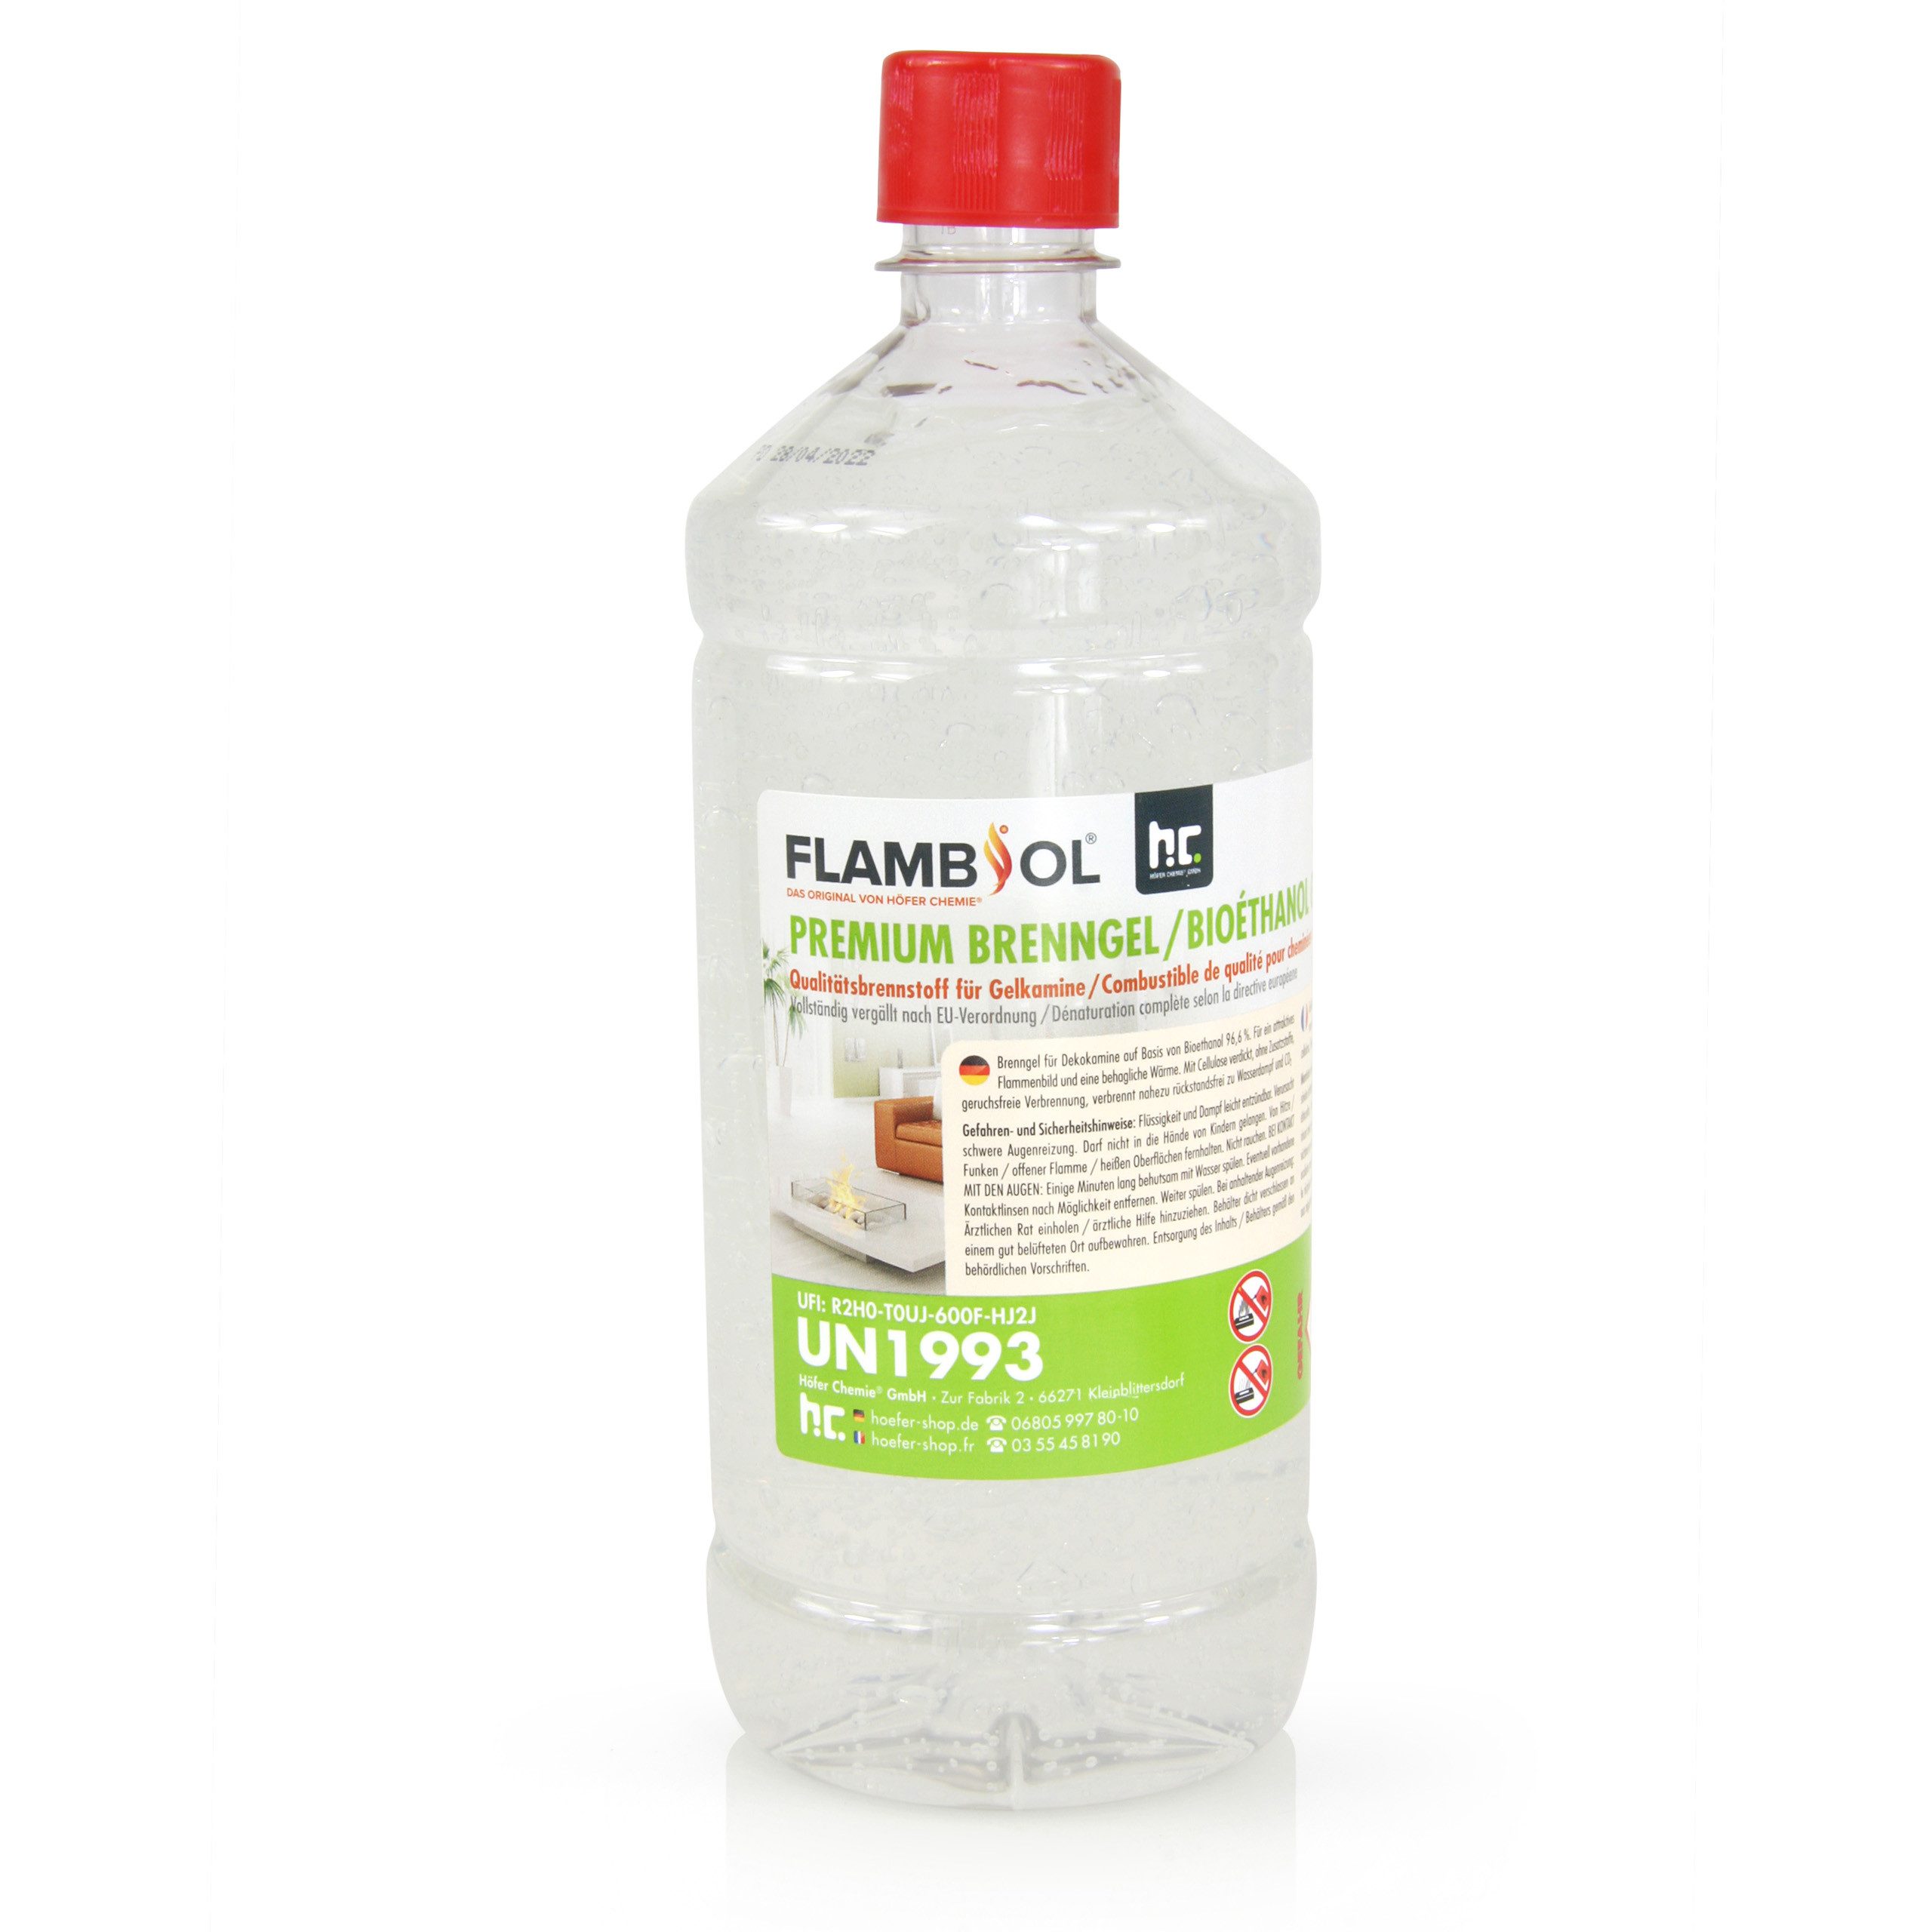 FLAMBIOL Bioethanol 1 L FLAMBIOL® Premium Brenngel, 1 kg